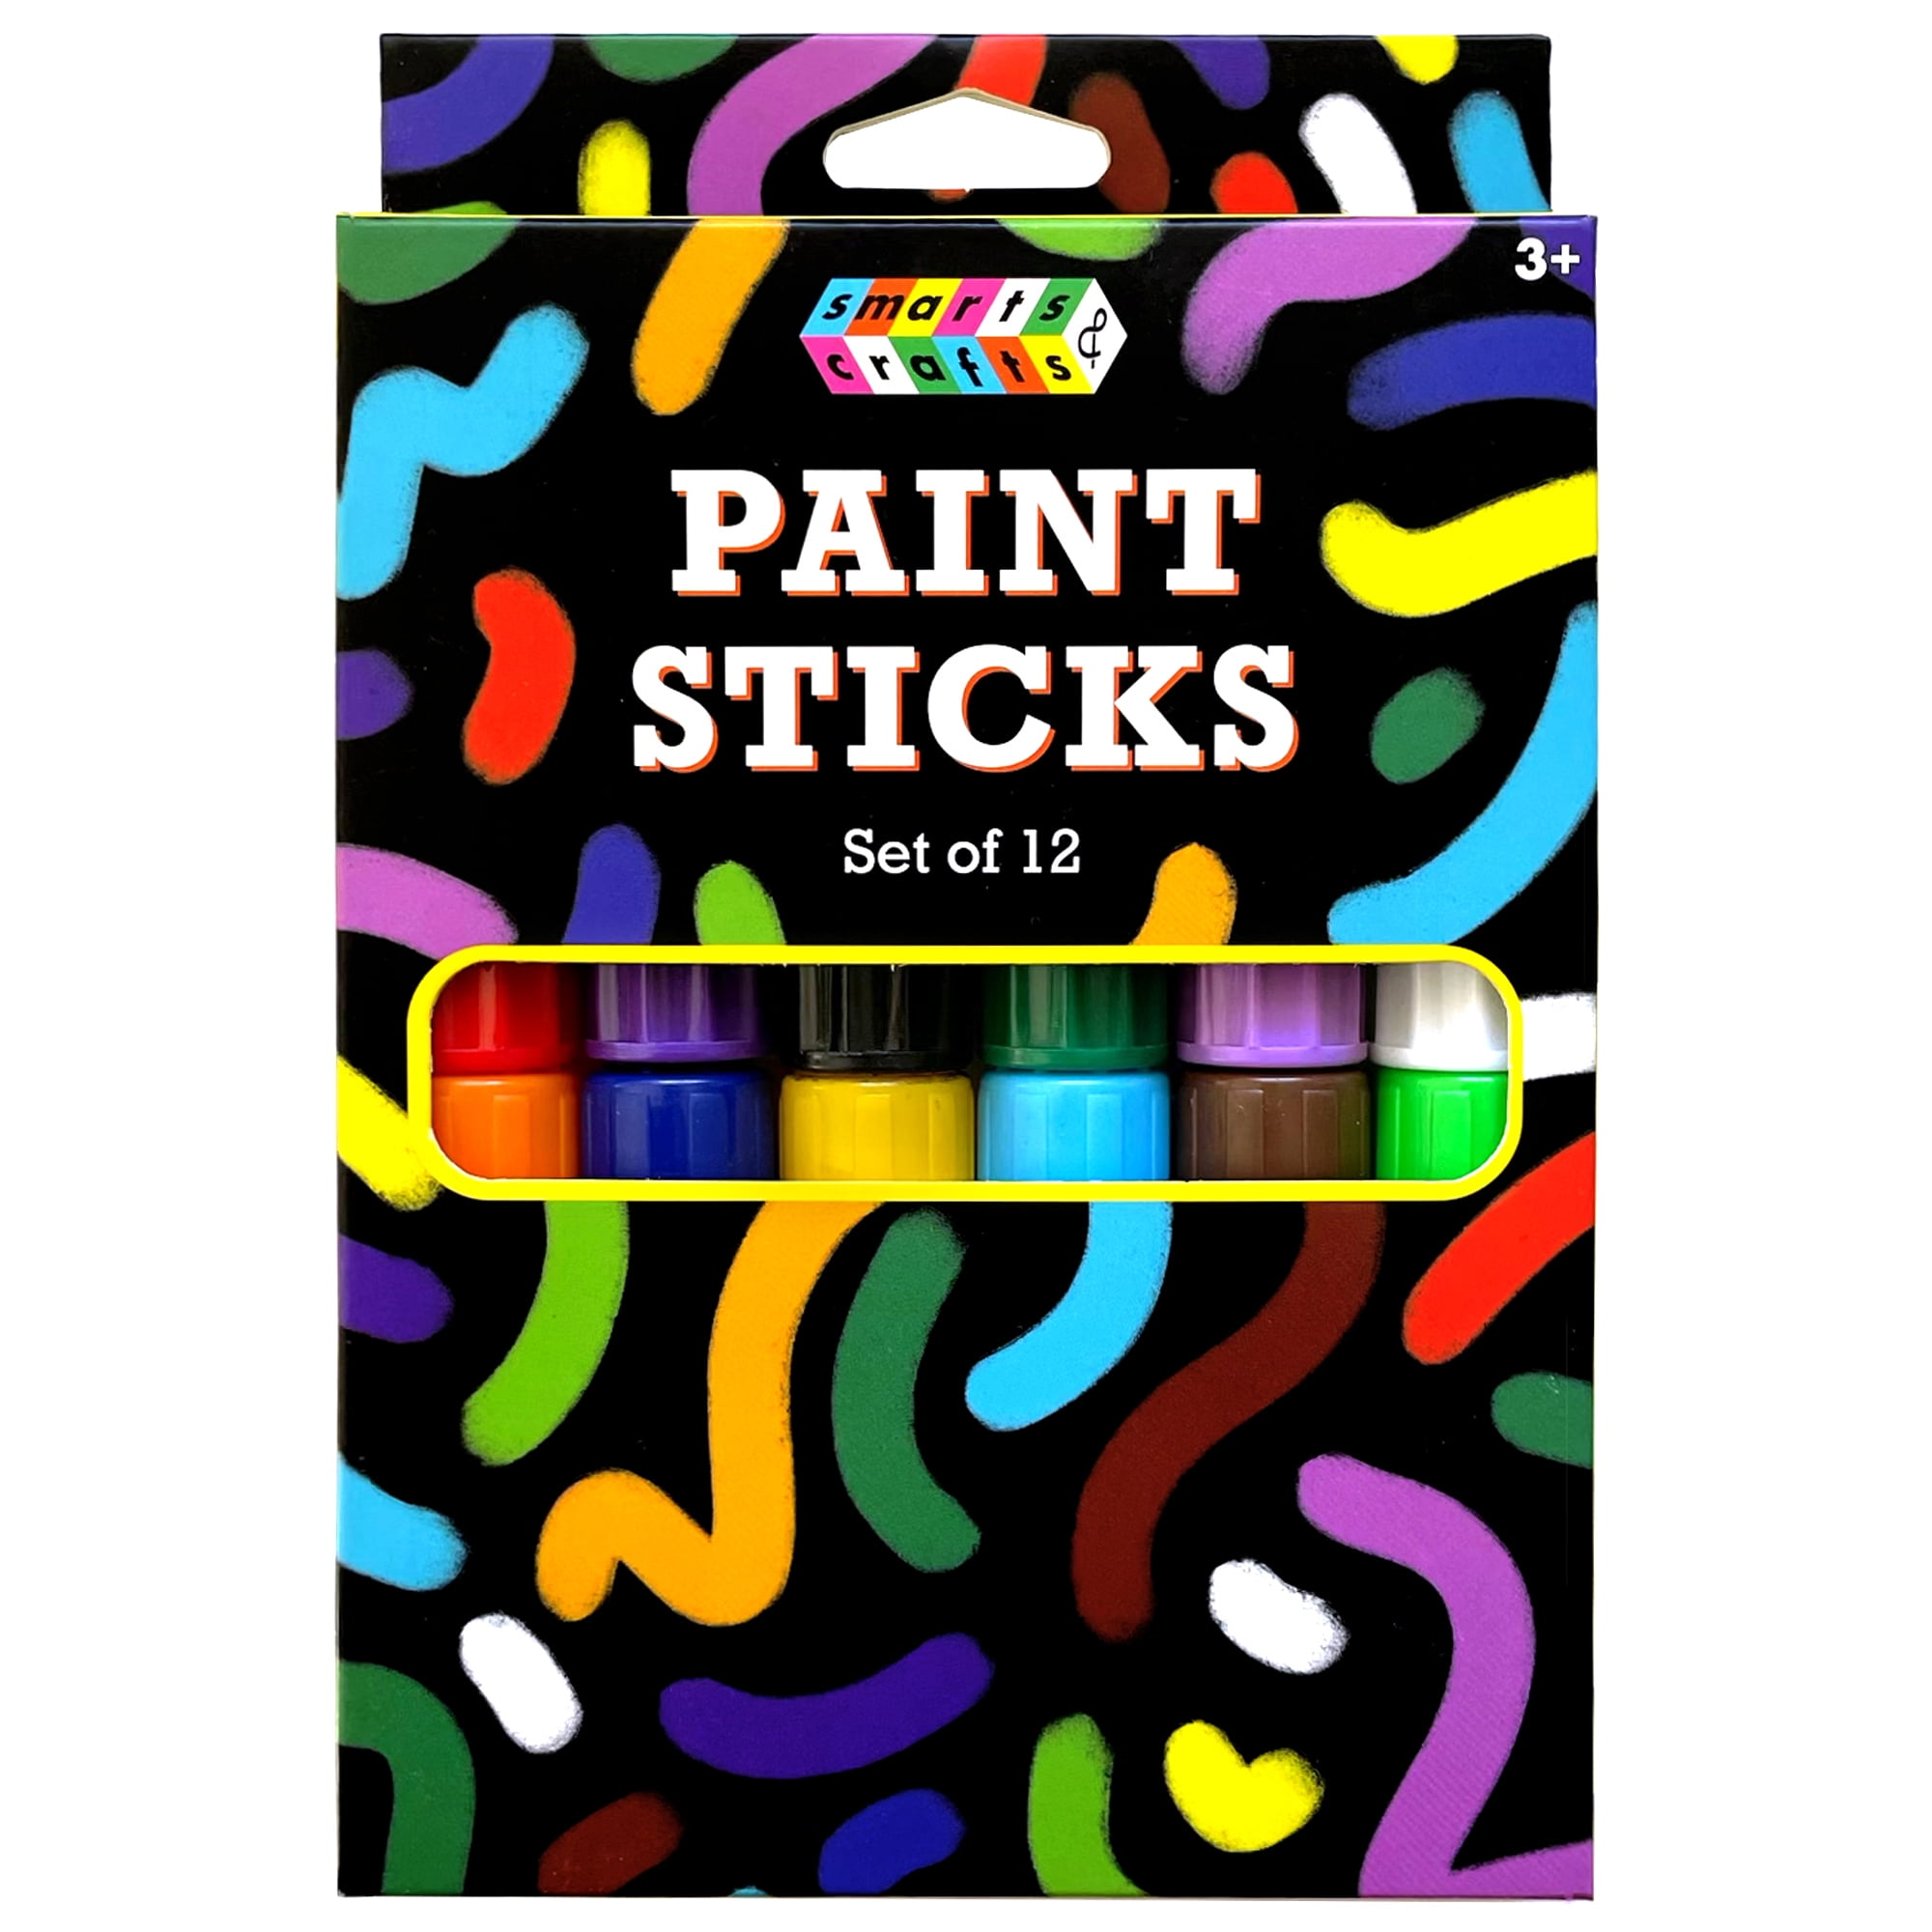 Tim & Tess 1 Well Plastic Paint Palette 637 Shop smarter, save money and  More Shop Smarter and Save More